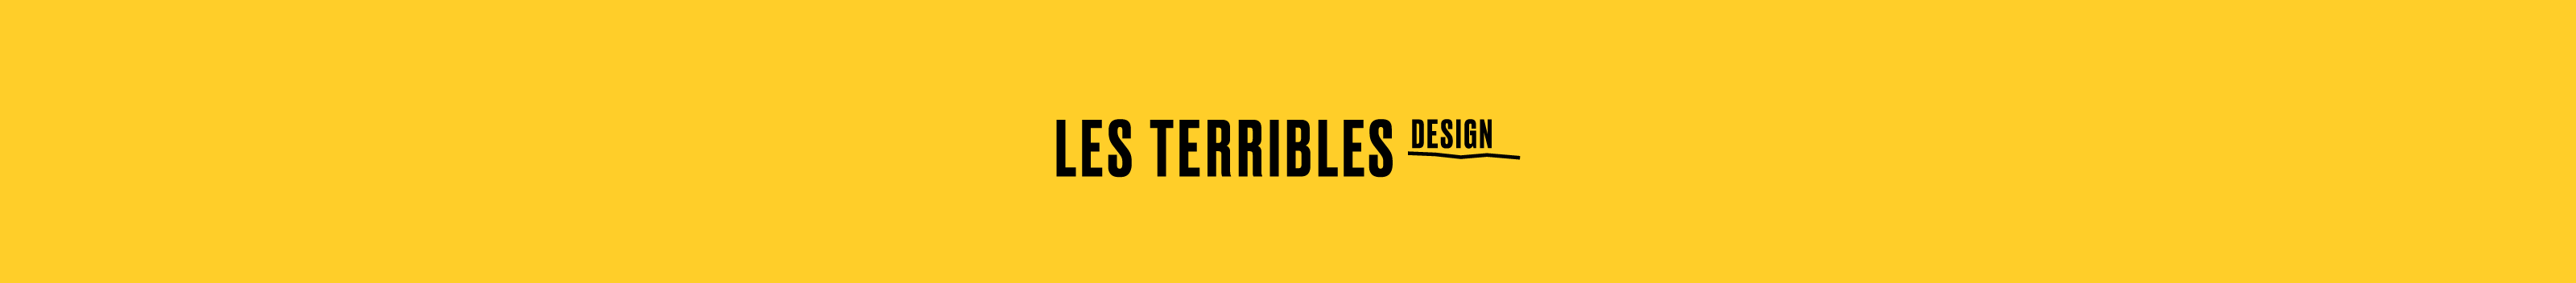 Les Terribles's profile banner